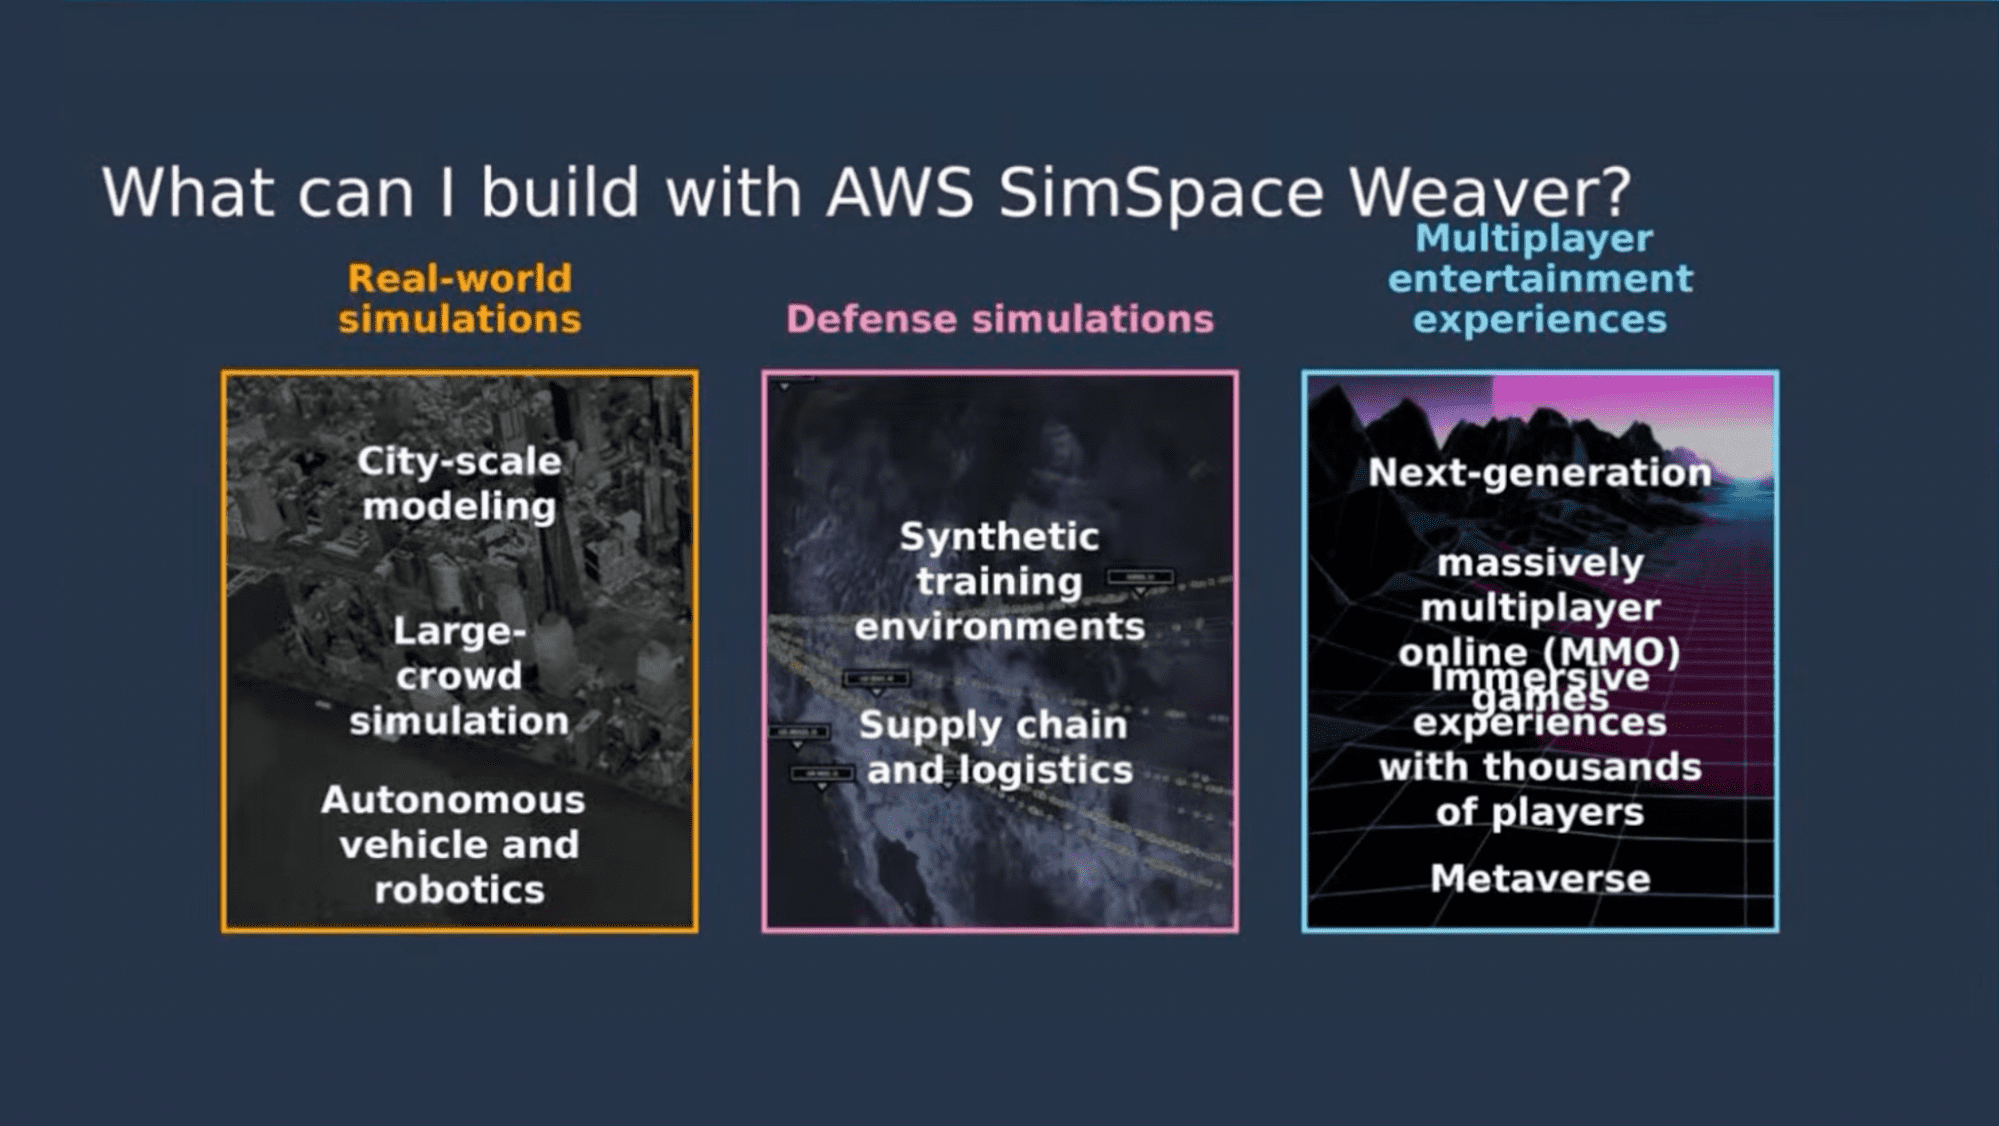 AWS SimSpace Weaver